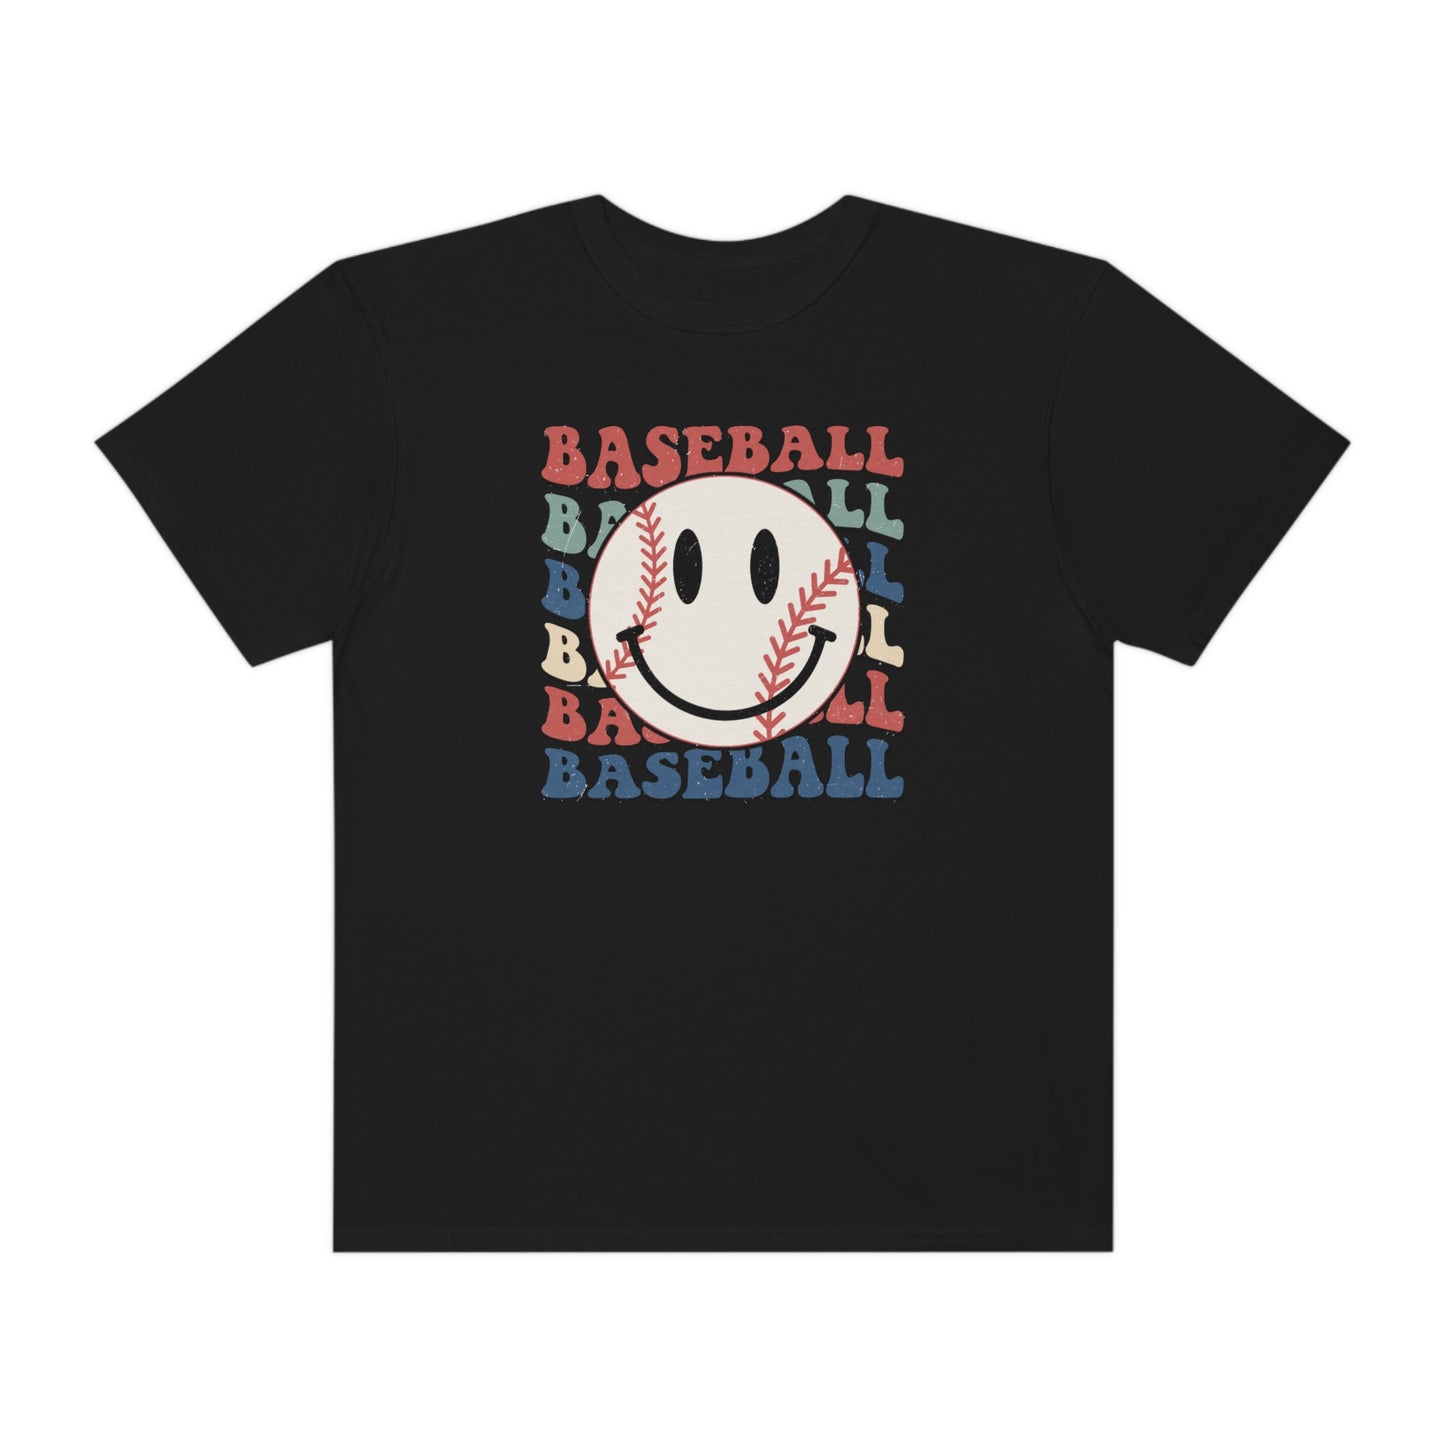 Baseball Mom T-Shirt, Baseball Game Sports Shirt, Baseball Jersey Shirt, Baseball Shirt for Women, Baseball Gift